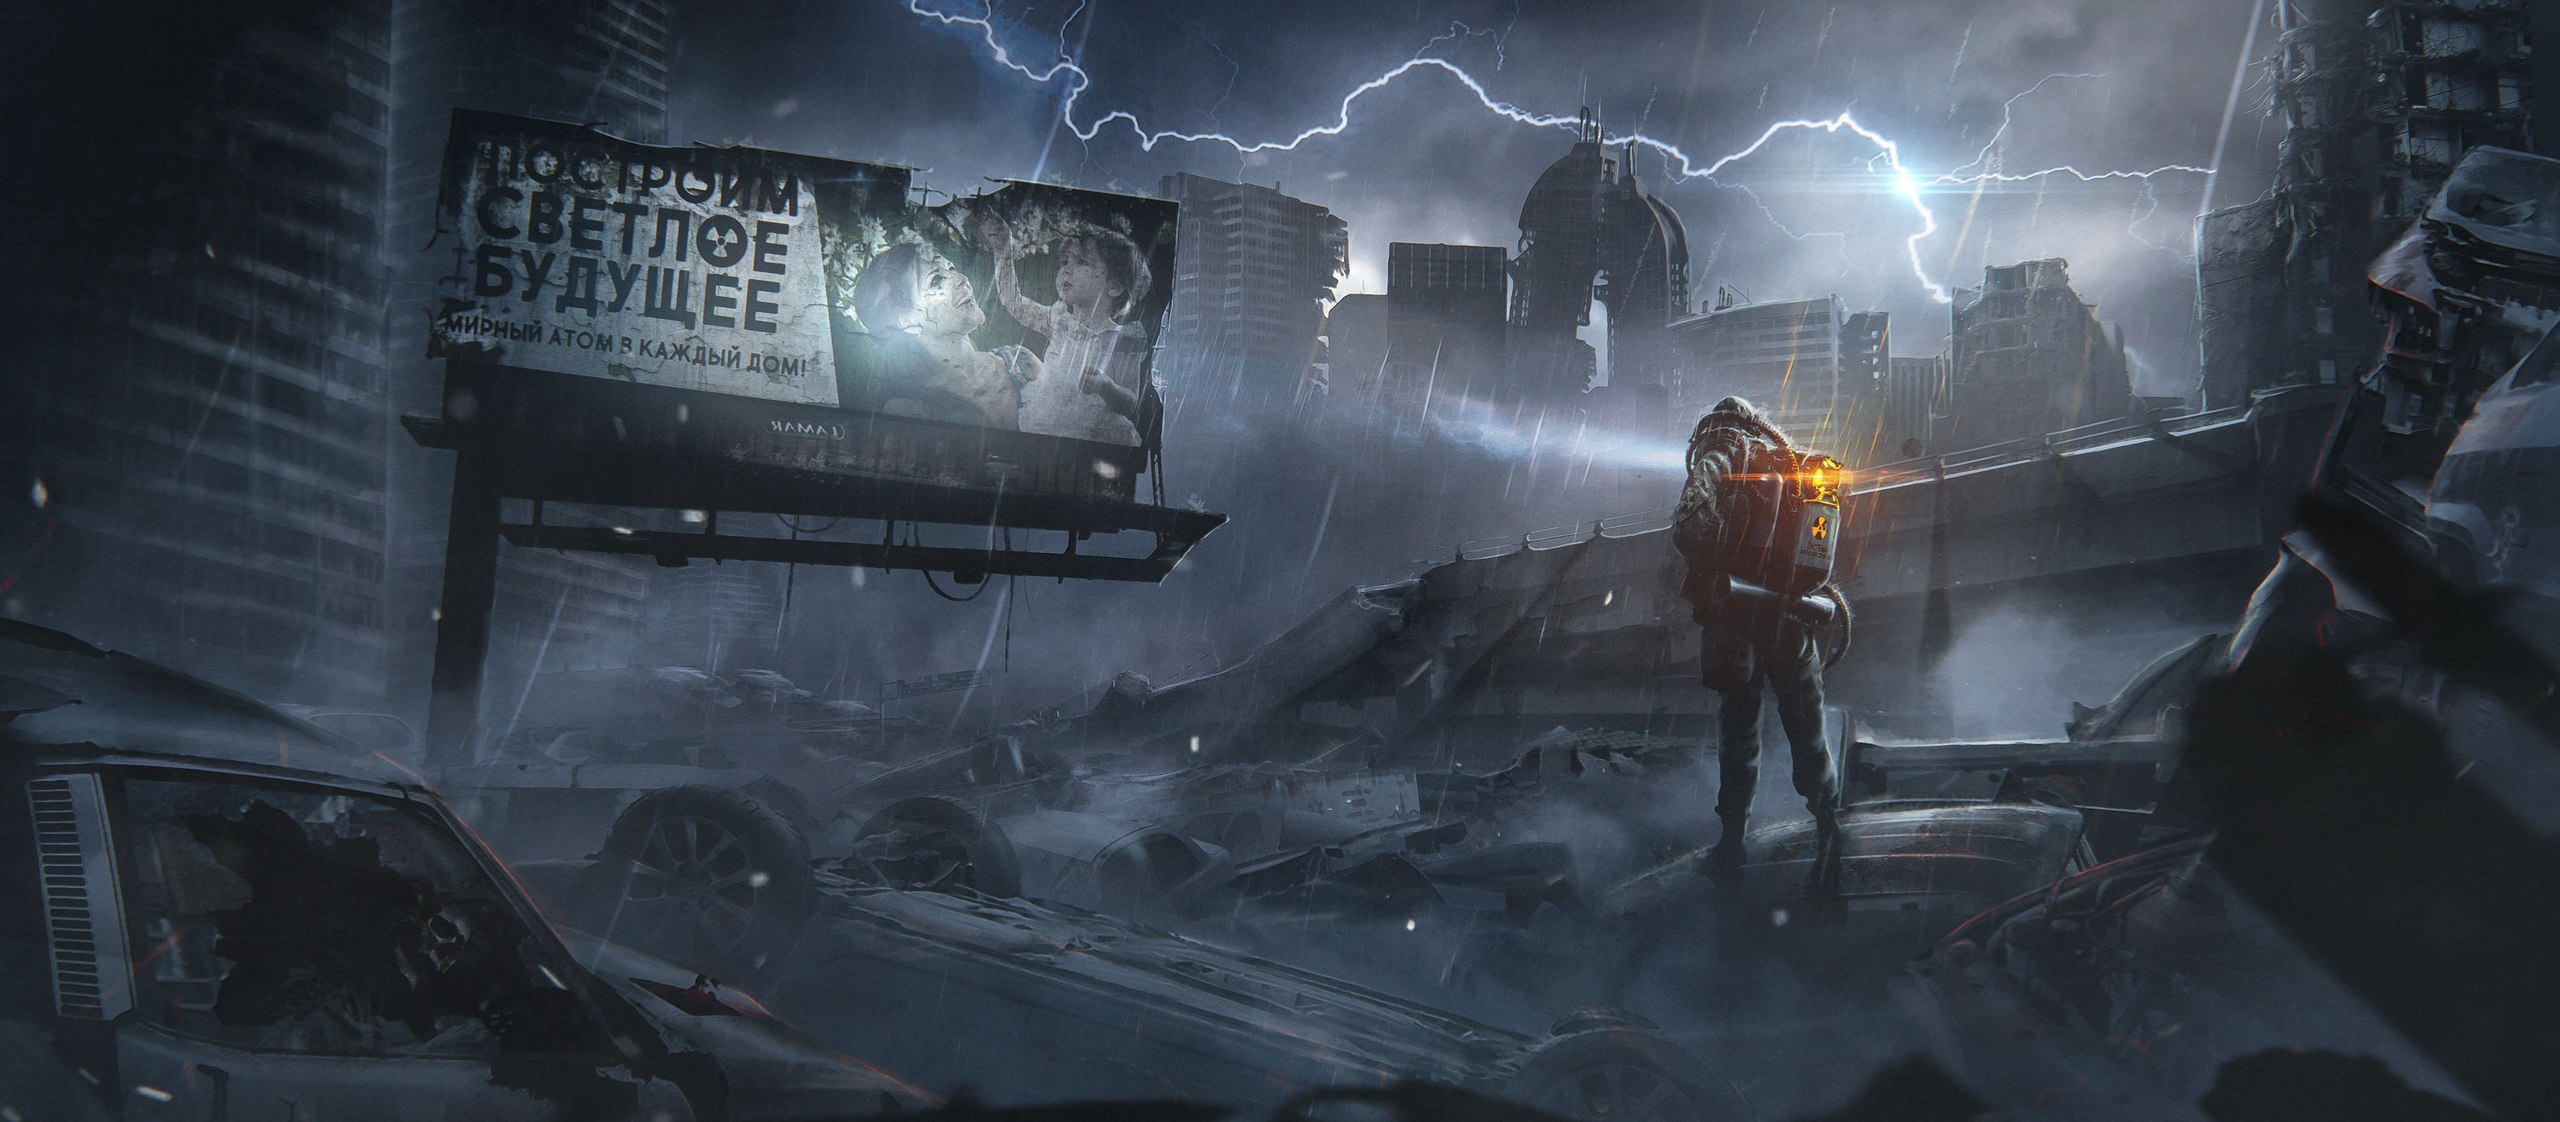 Artwork Digital Art Science Fiction Apocalyptic Disaster Destruction Building Car Lightning Skull En 2560x1122